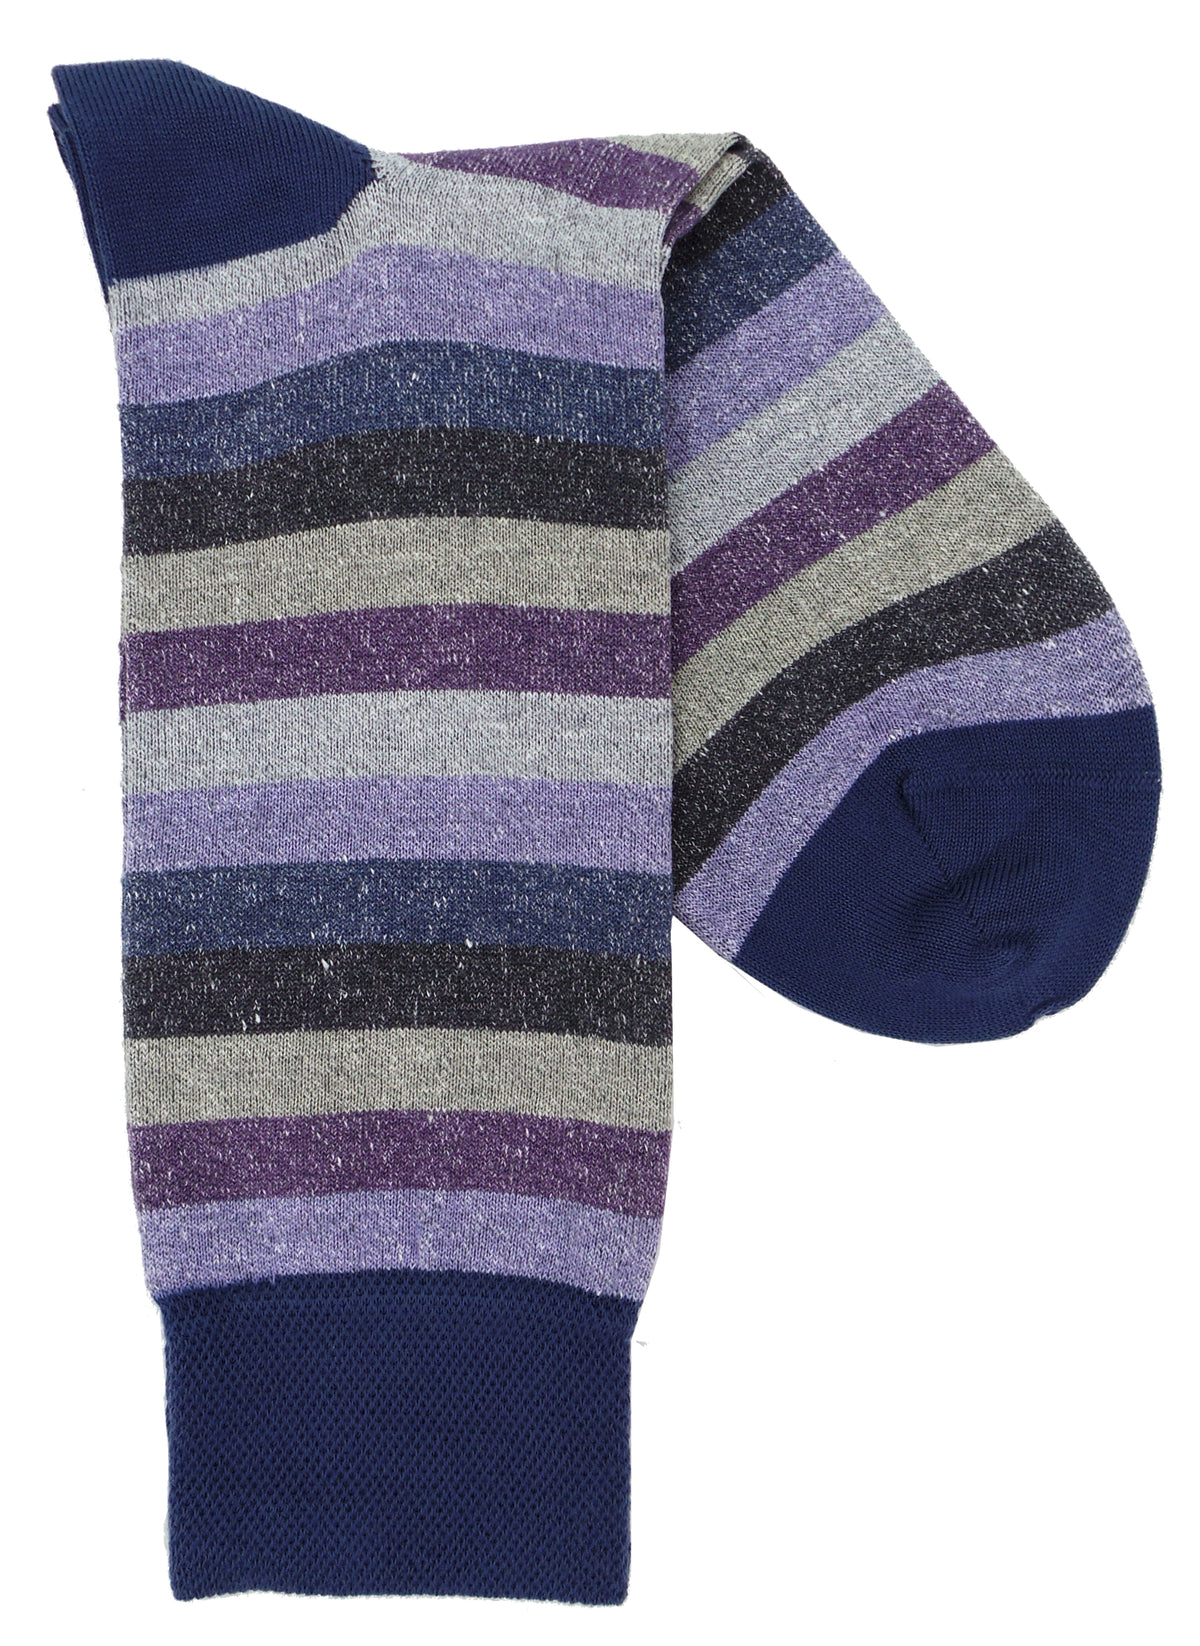 Marcoliani 4123 Tonal Stripe Linen Cotton Blend Socks